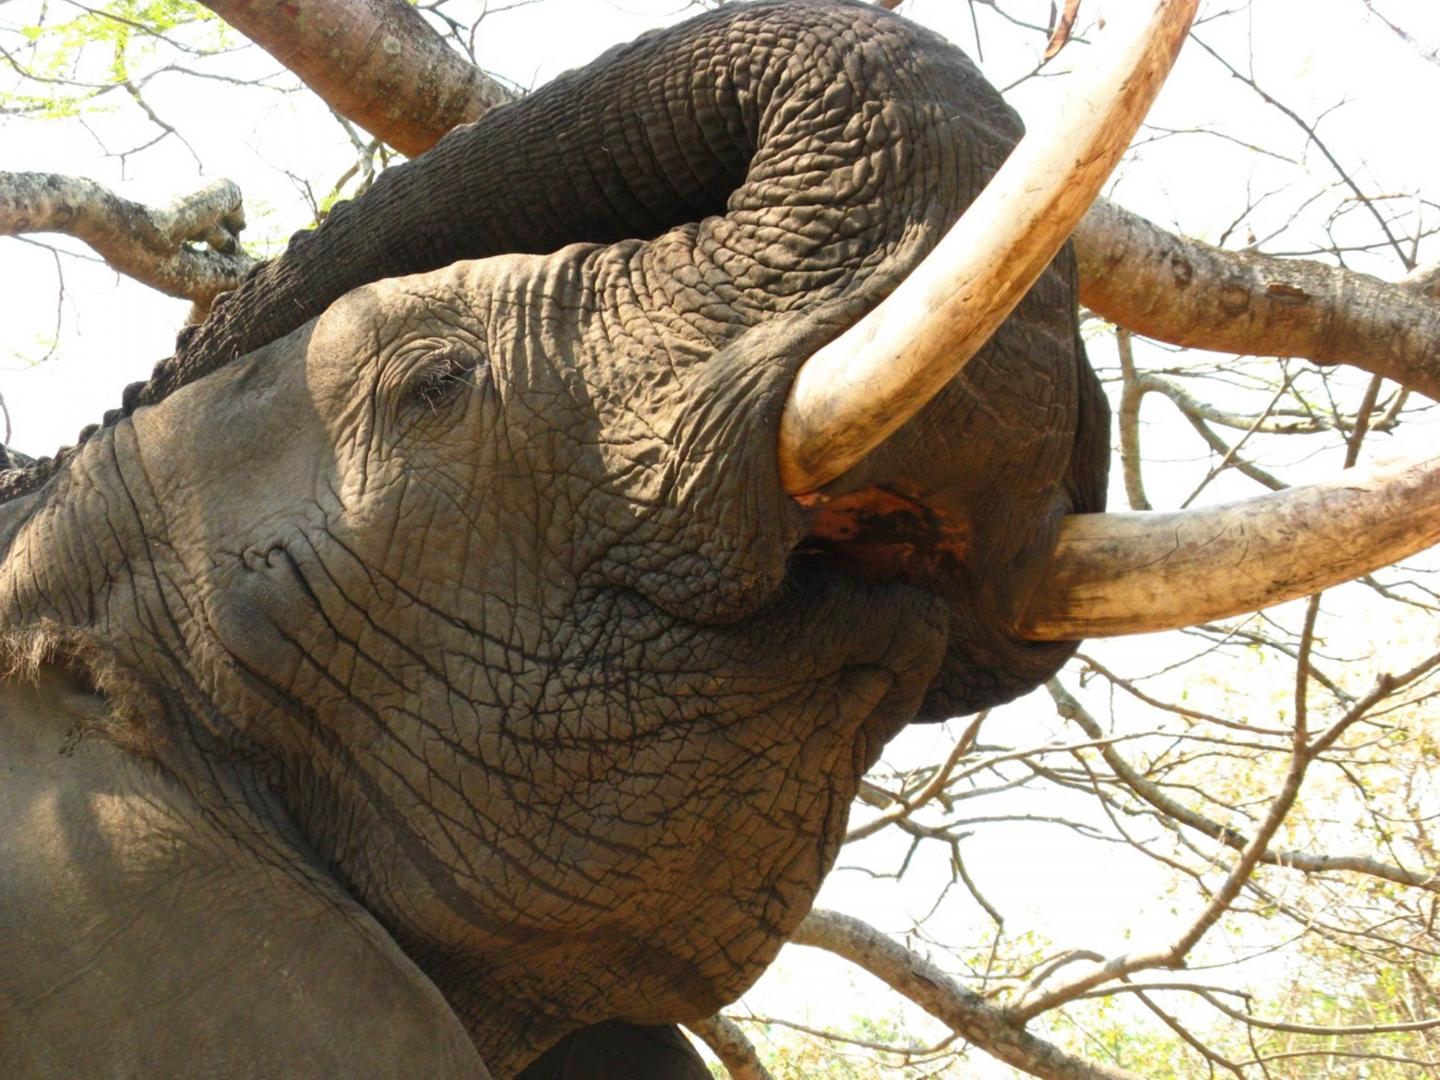 Measuring Impact of Kenya's Ivory Burning 'Urgent' Say UQ Scientists